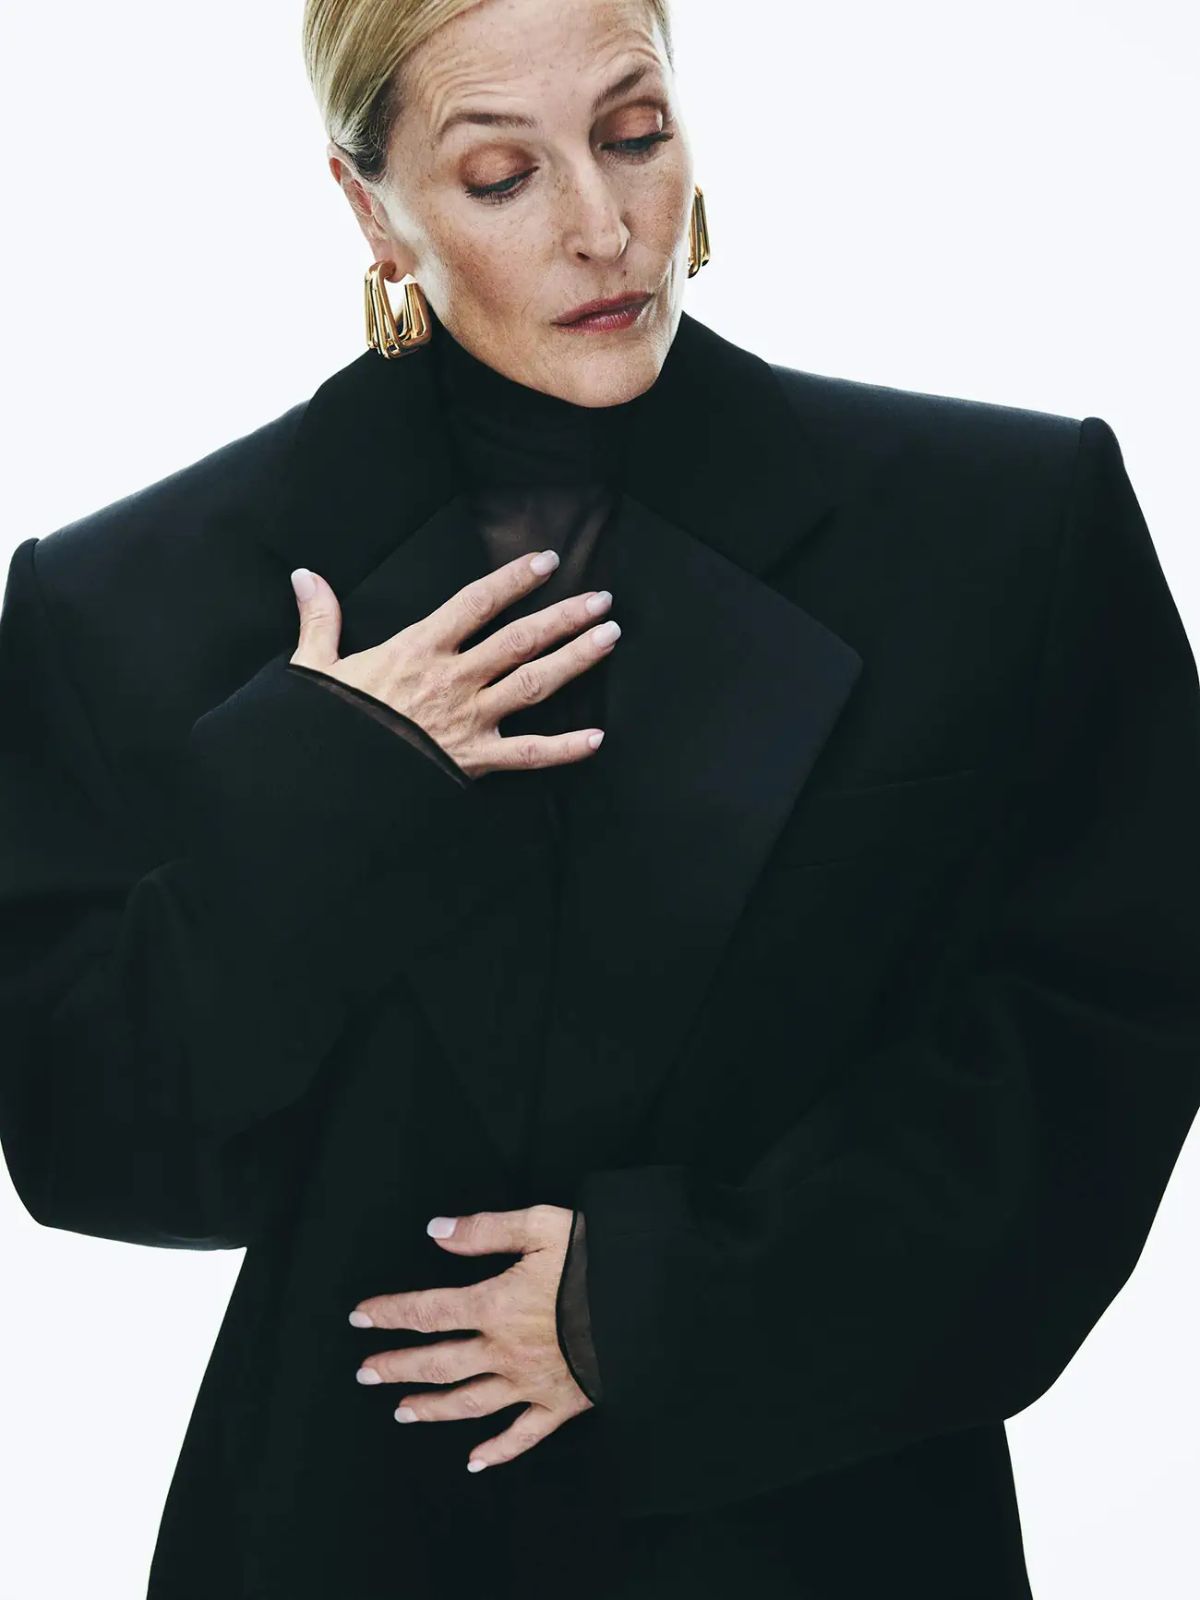 Gillian Anderson in Saint Laurent by Philip Messmann for Porter Magazine October 2023